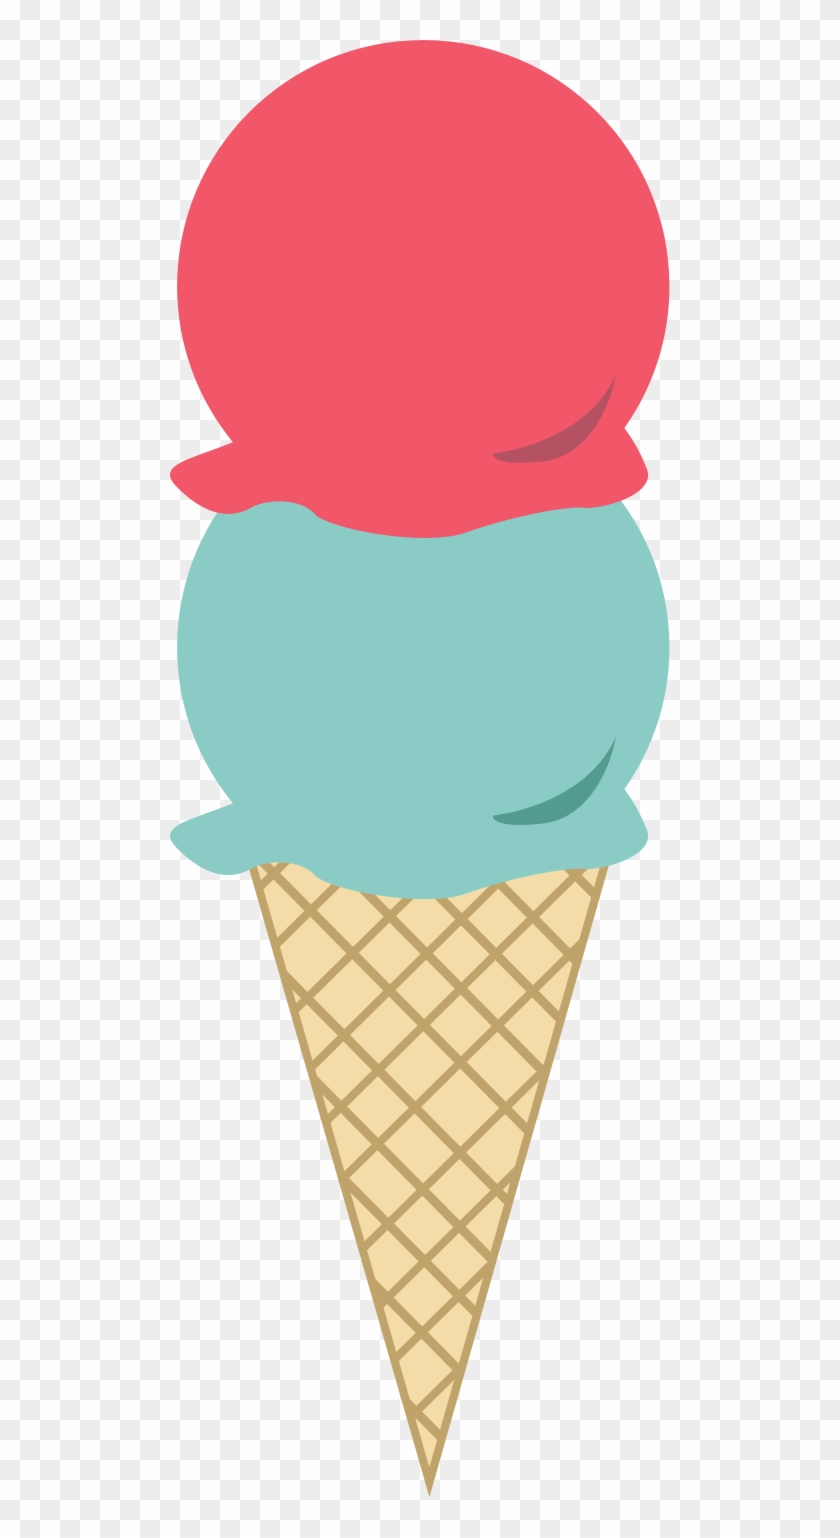 Ice Cream Cone Clipart Of Ice - Ice Cream Cone Vector Png #547519